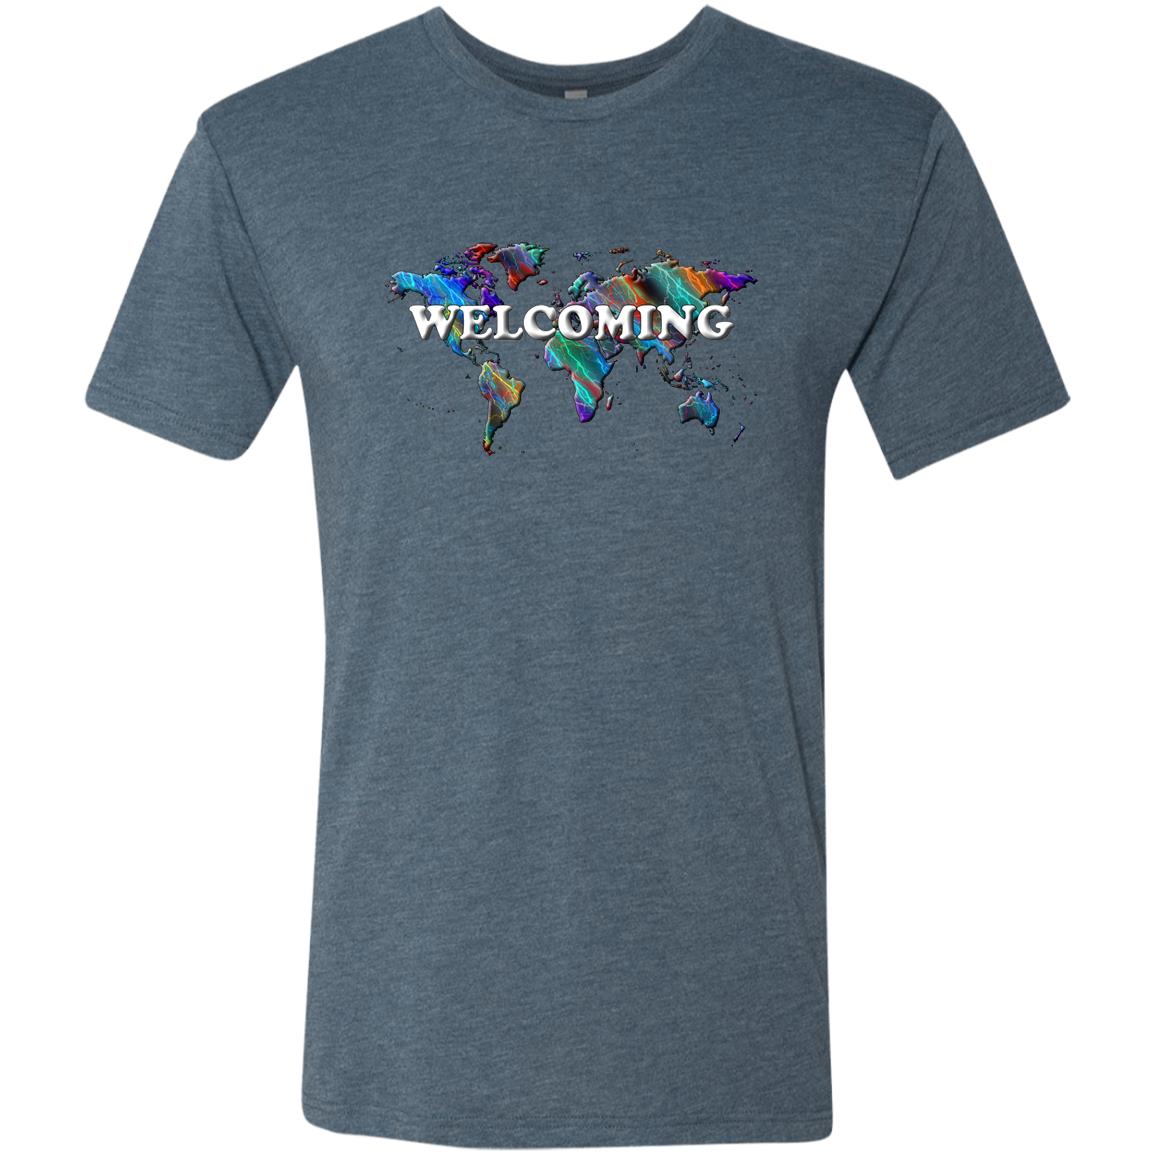 Welcoming Statement T-Shirt